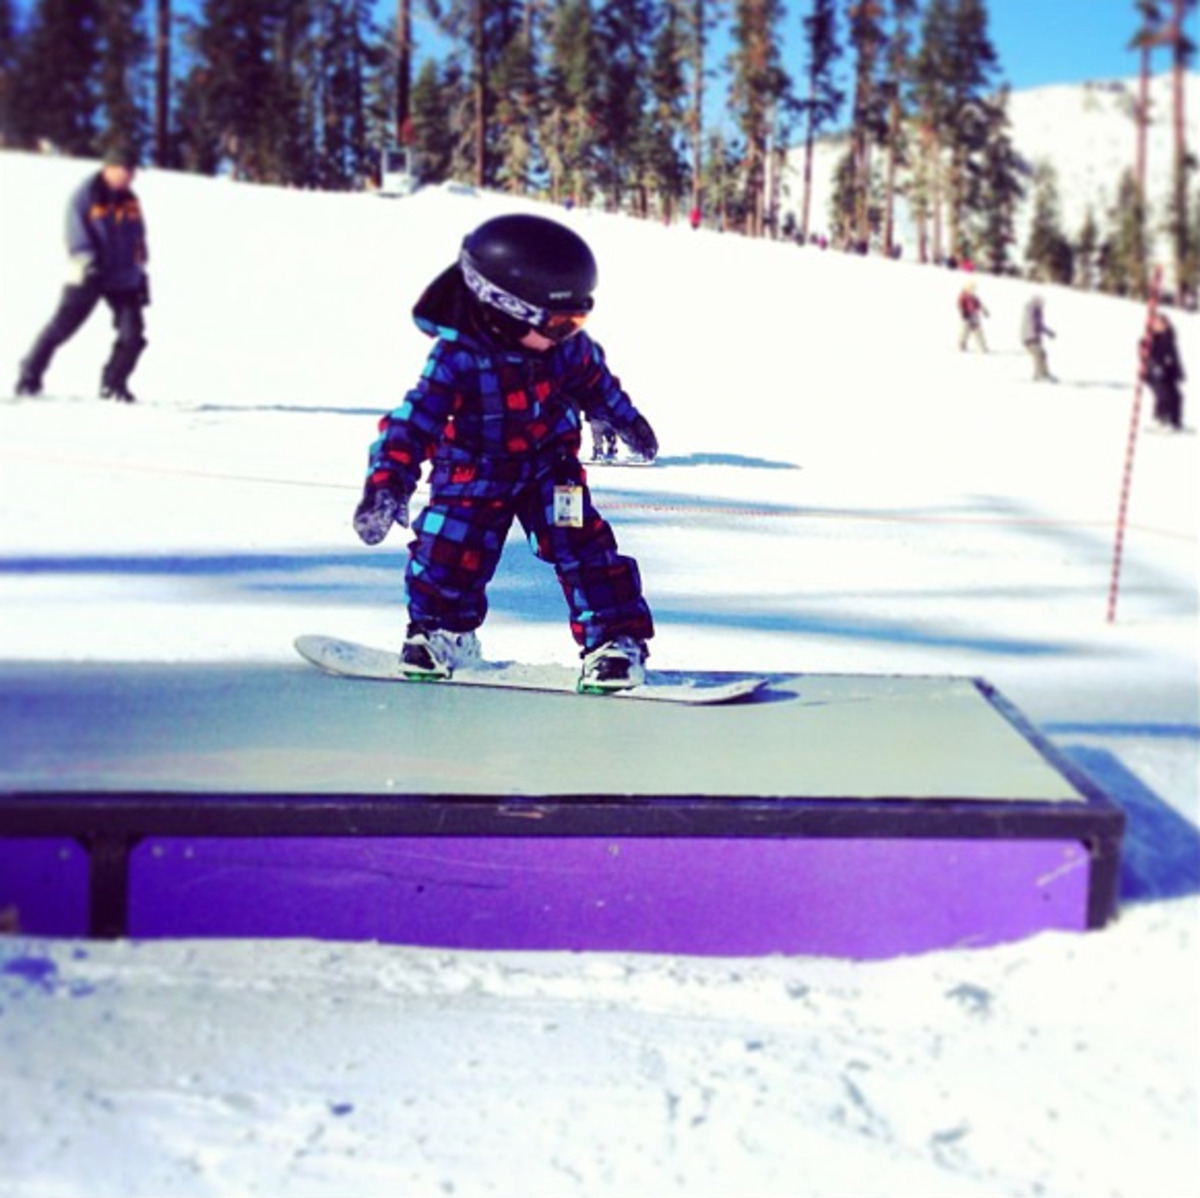 Winter New Mini Short Skiing Shoes Adult Kids Adjustable Snowboard Ski Sled  Outdoor Travel Snow Walking